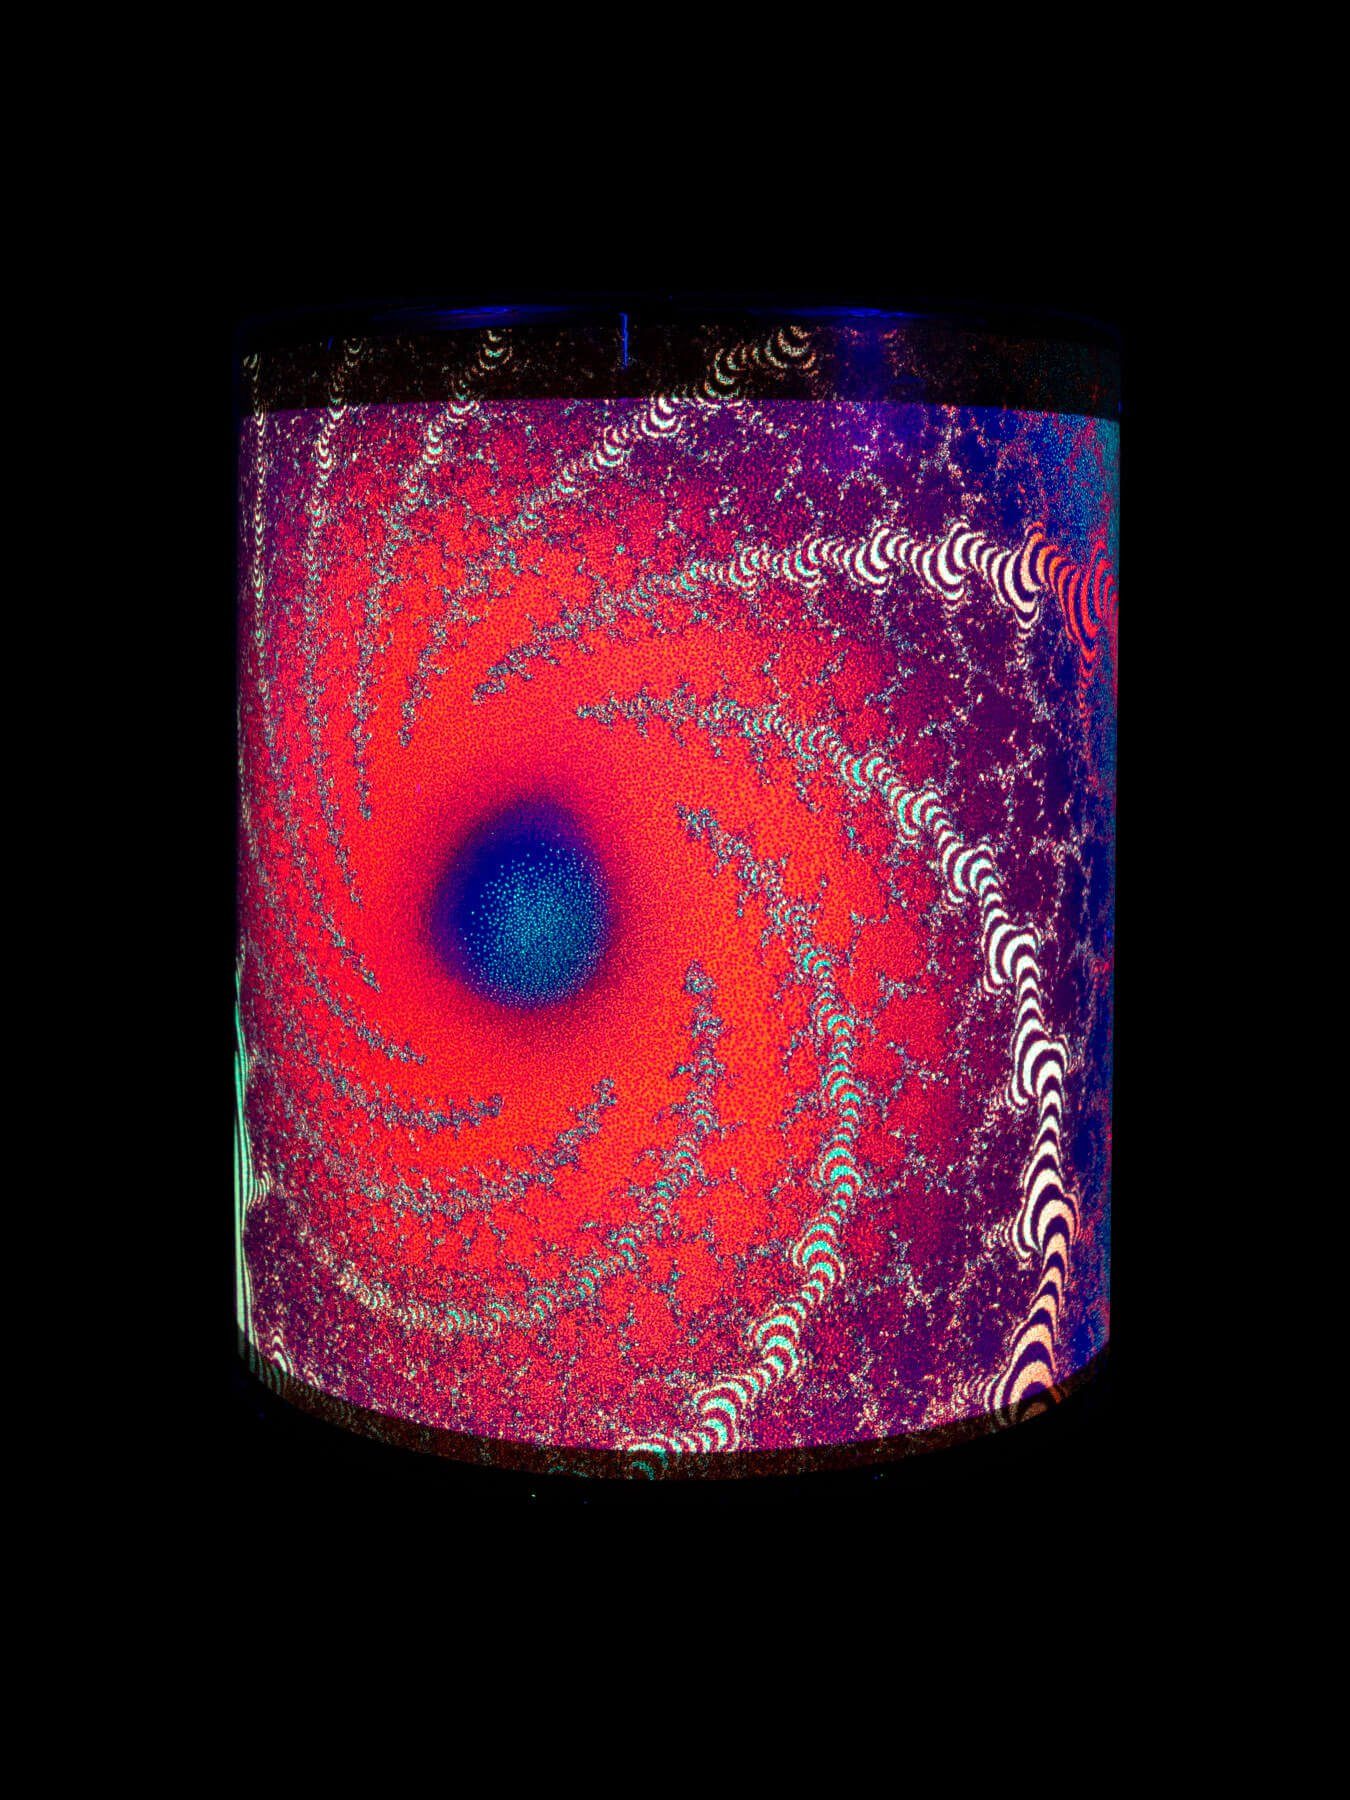 unter Fluo IV", leuchtet "Fractal Schwarzlicht PSYWORK Neon UV-aktiv, Cup Keramik, Tasse Motiv Tasse Dimension